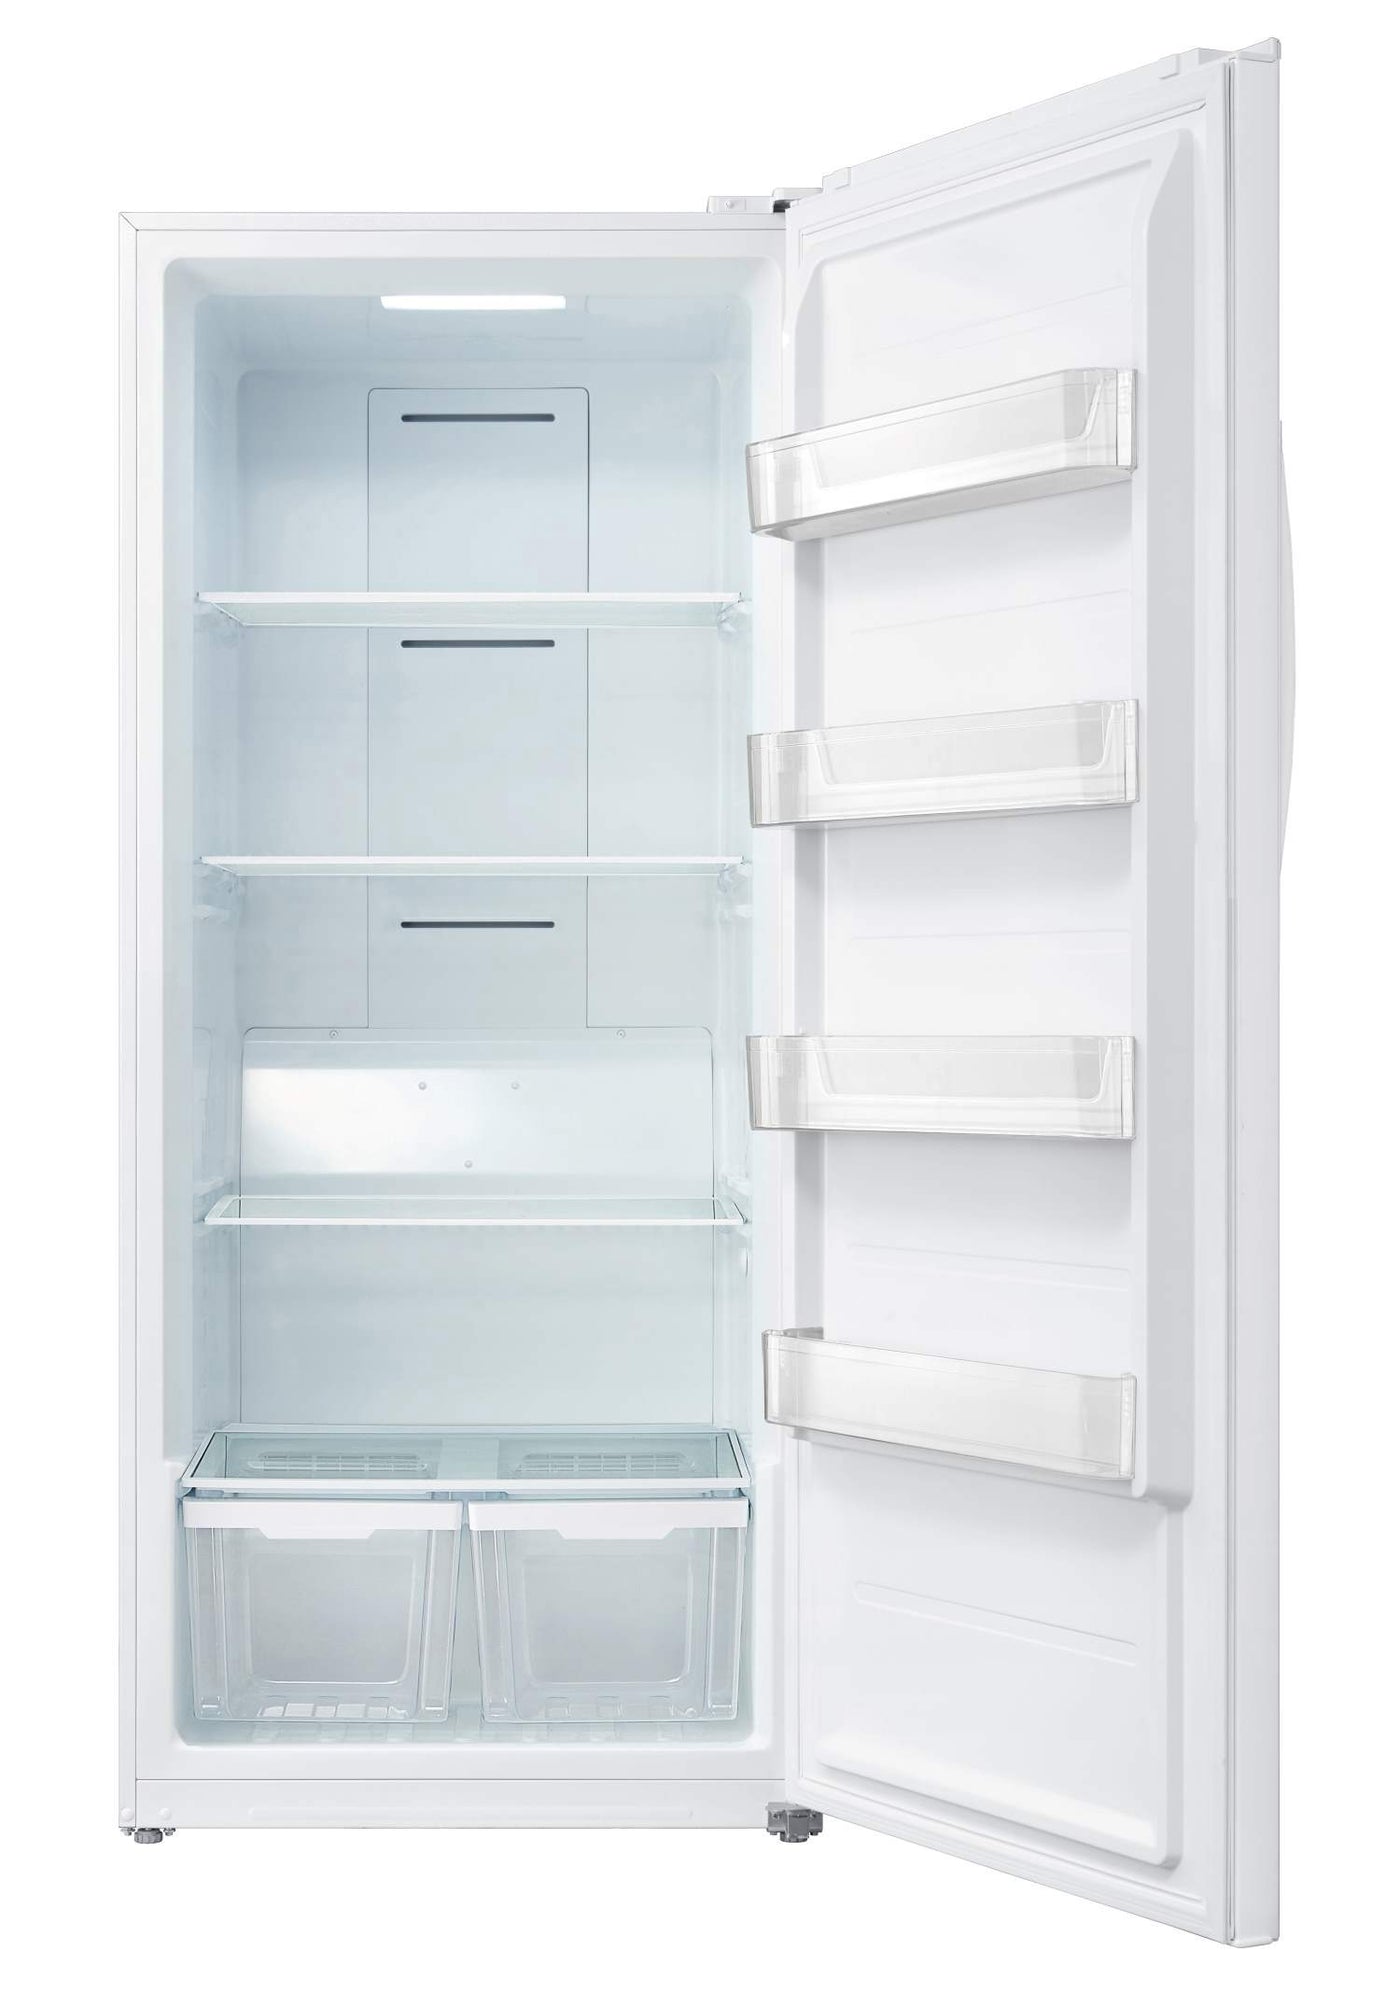 L2 White Upright Freezer and Convertible Fridge (21 Cu. Ft) - LRU21B6AWW